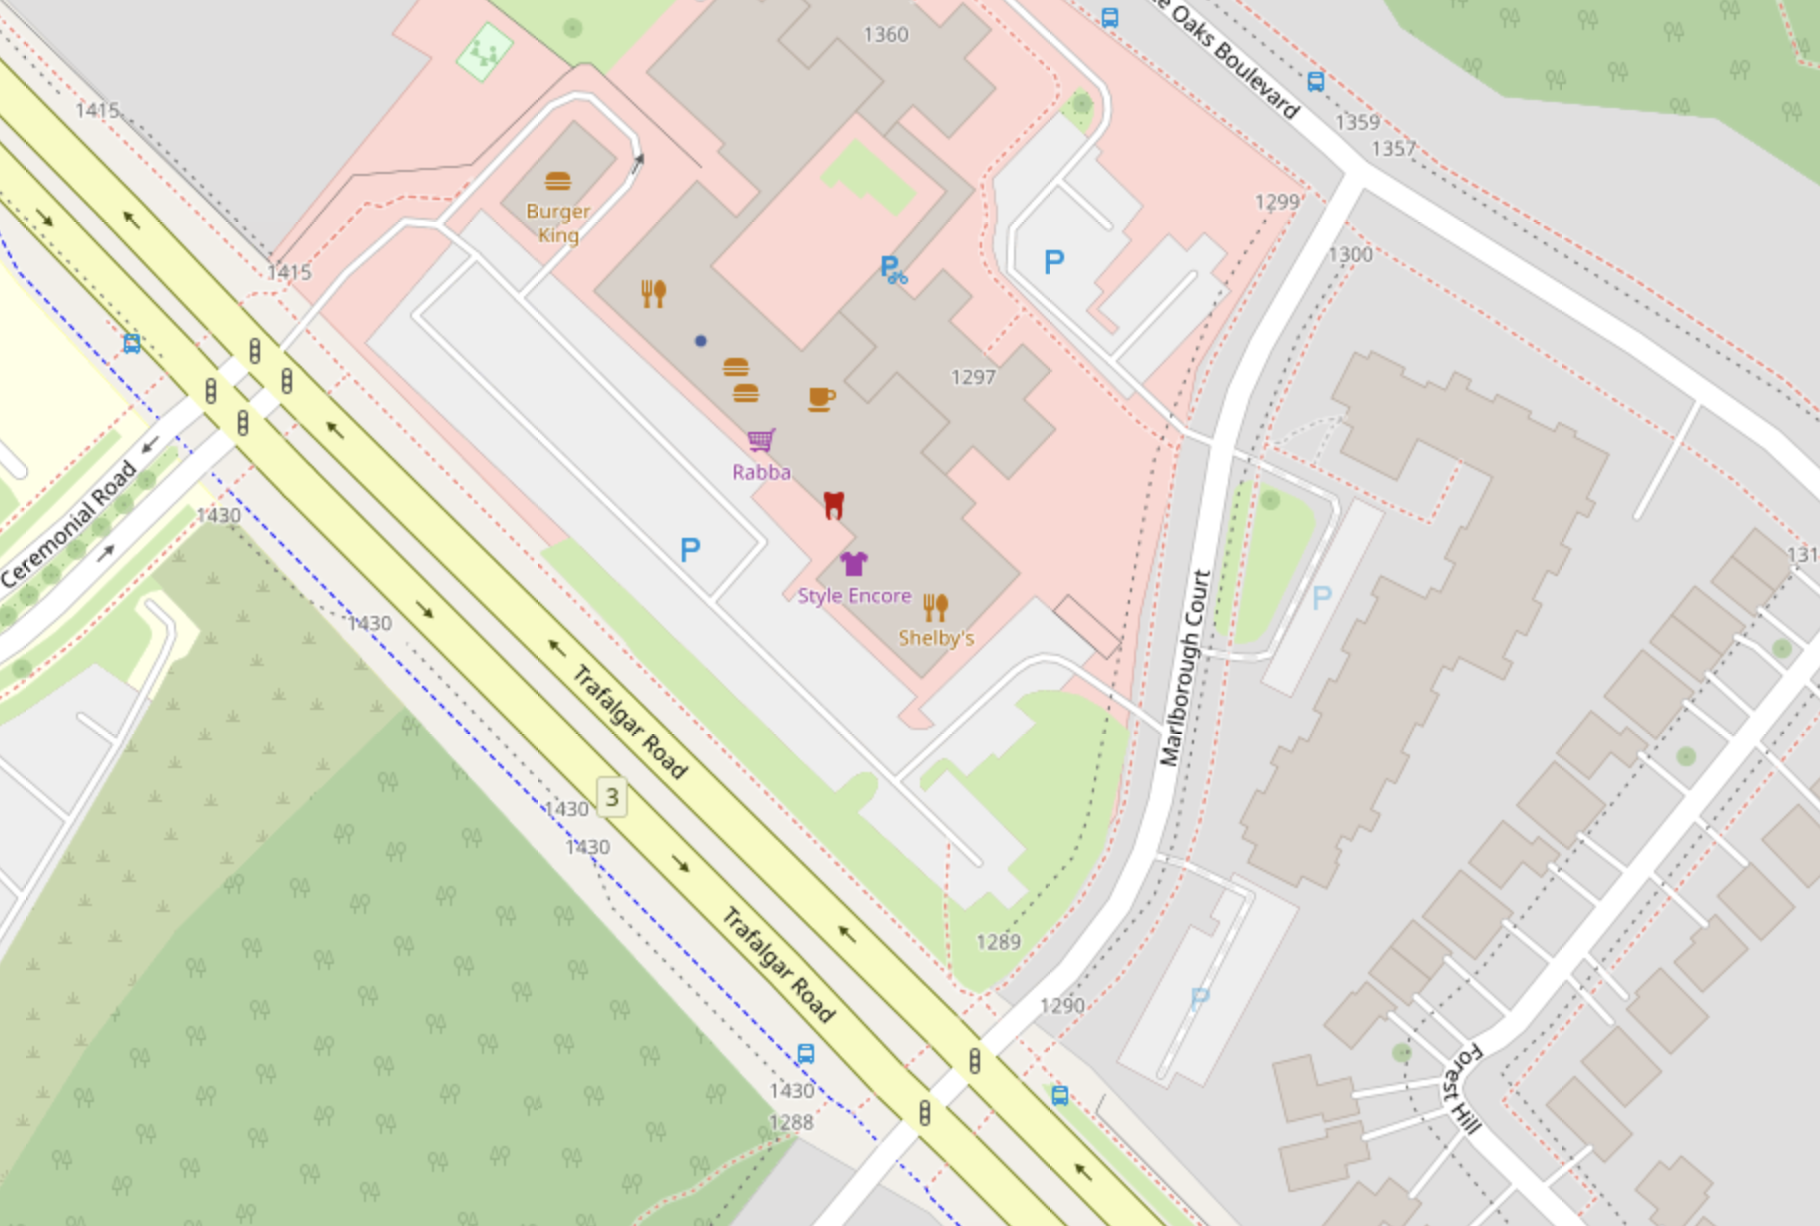 Trafalgar Rd and Marlborough Crt | Openstreetmap